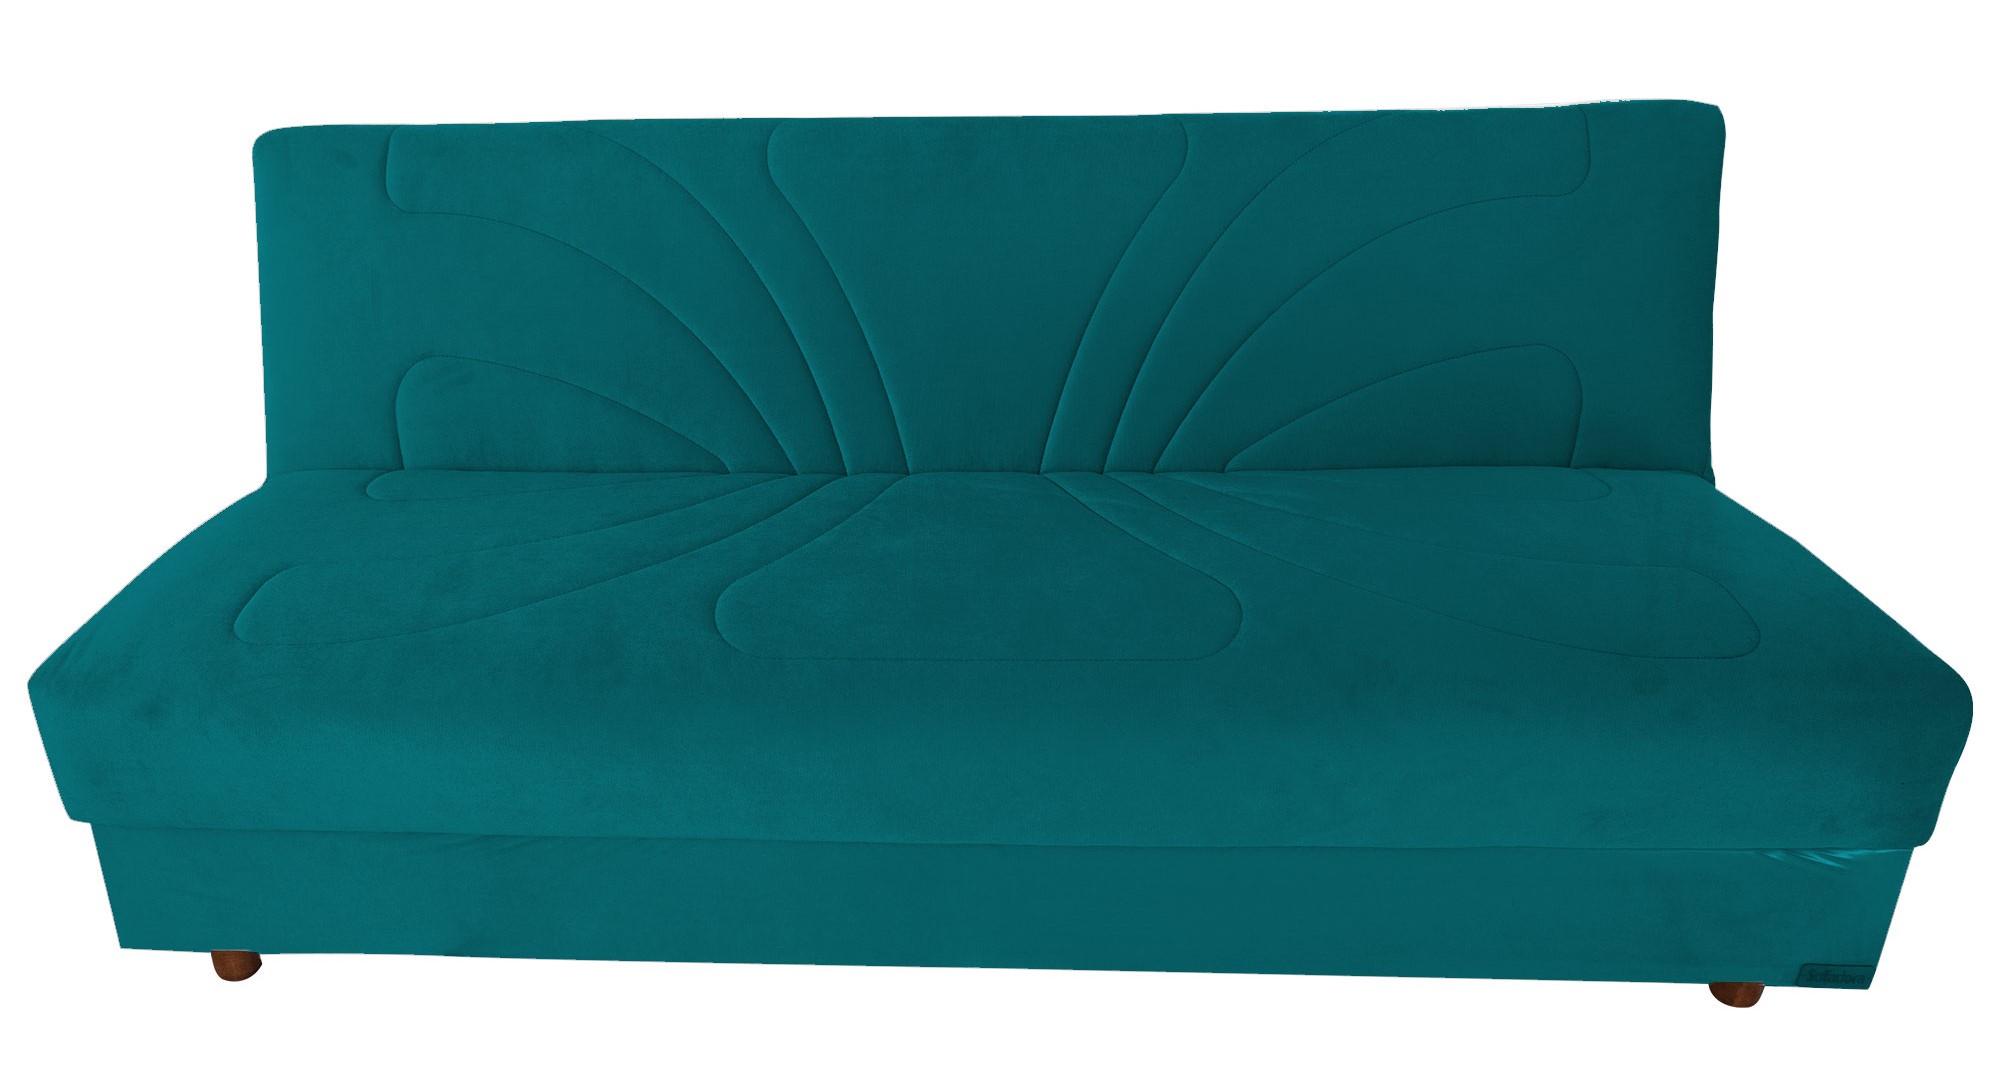 Sofa Bed Tango from Aldora